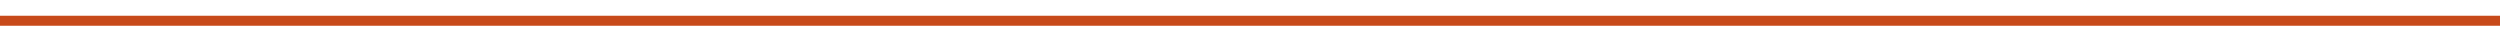 Horizontal orange line